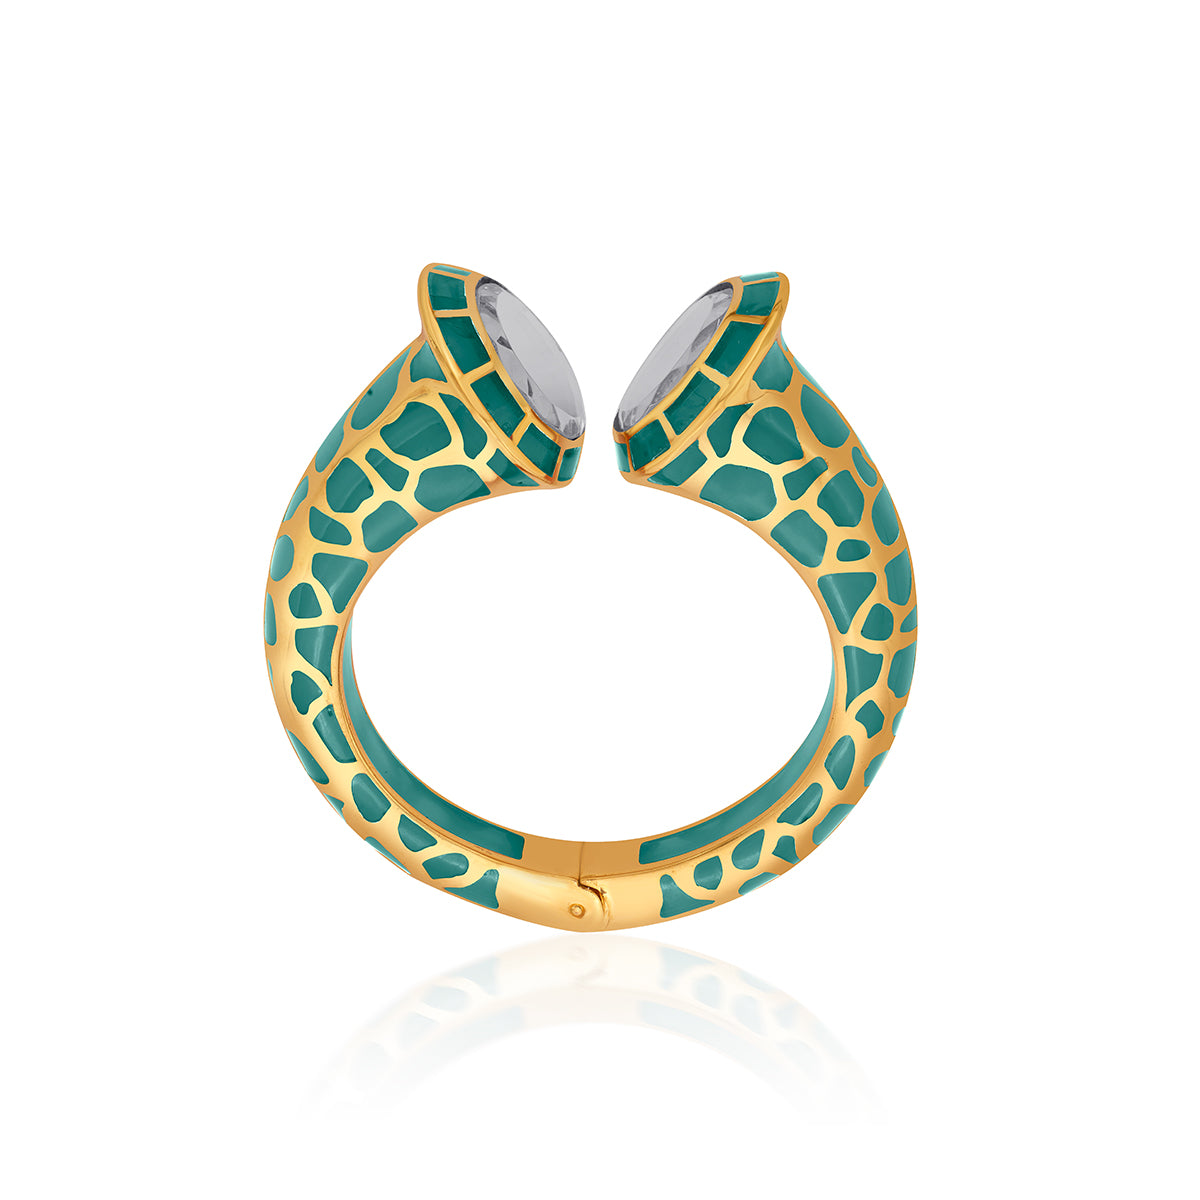 La Conchita Statement Hinge Cuff in Turquoise - Isharya | Modern Indian Jewelry